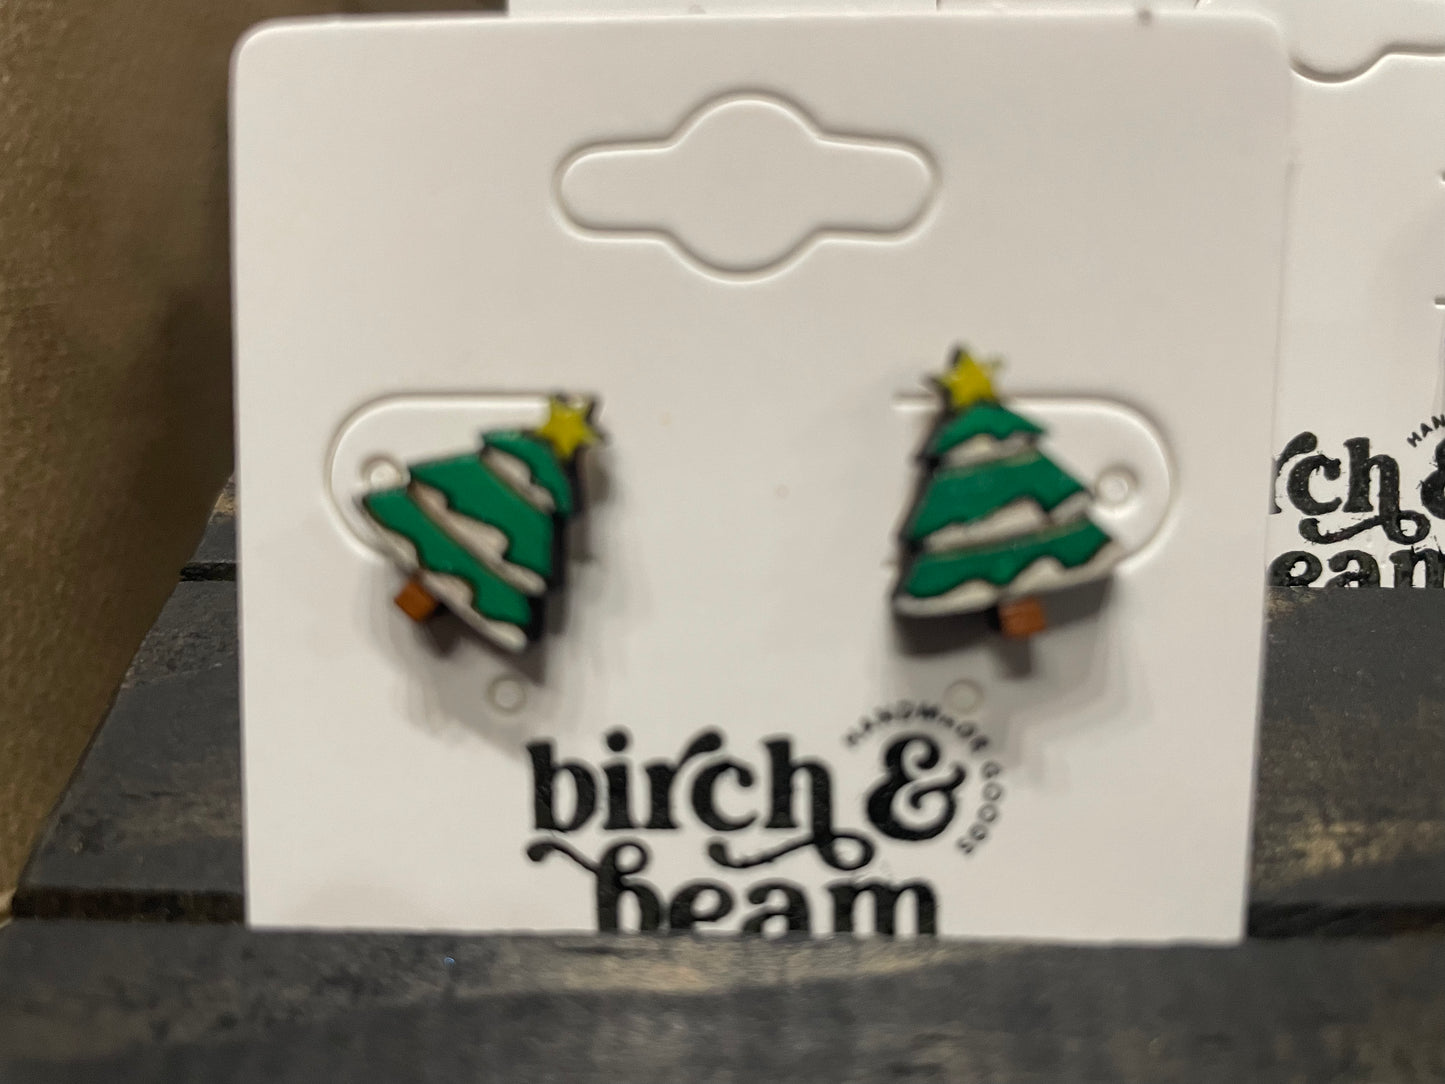 Birch & Beam Earings